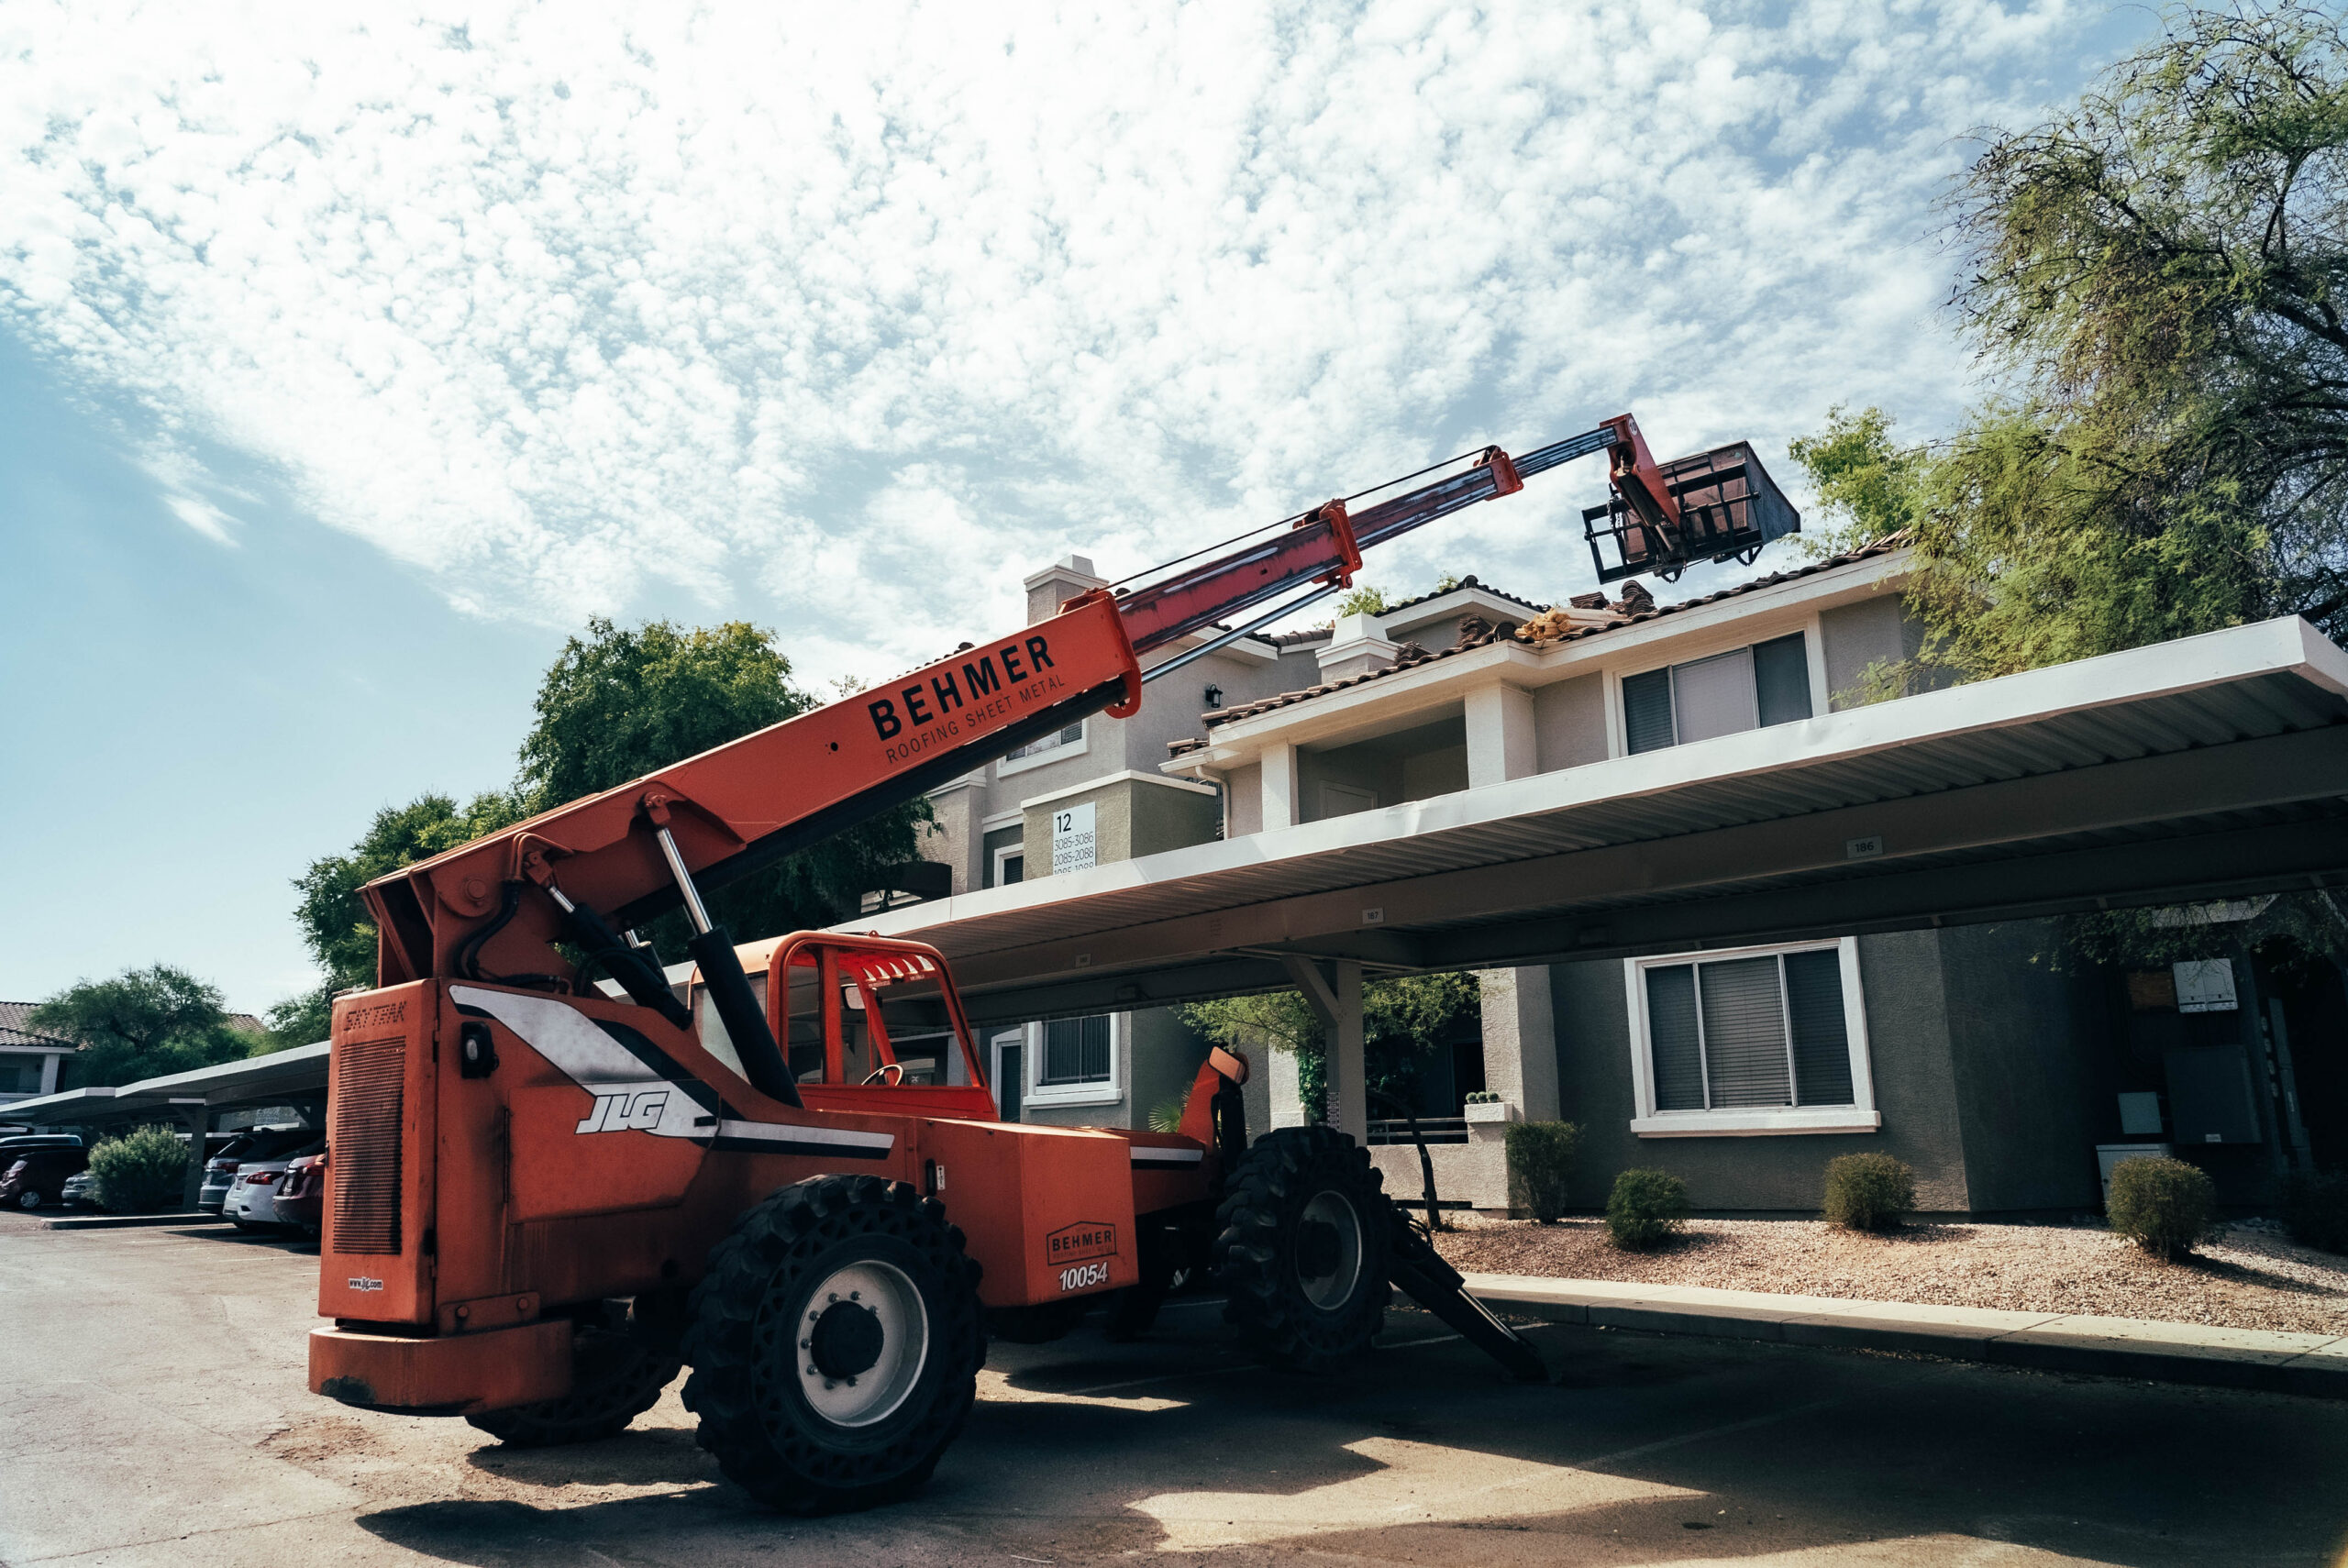 Orange crane positioned at a Glendale tile roof installation site.